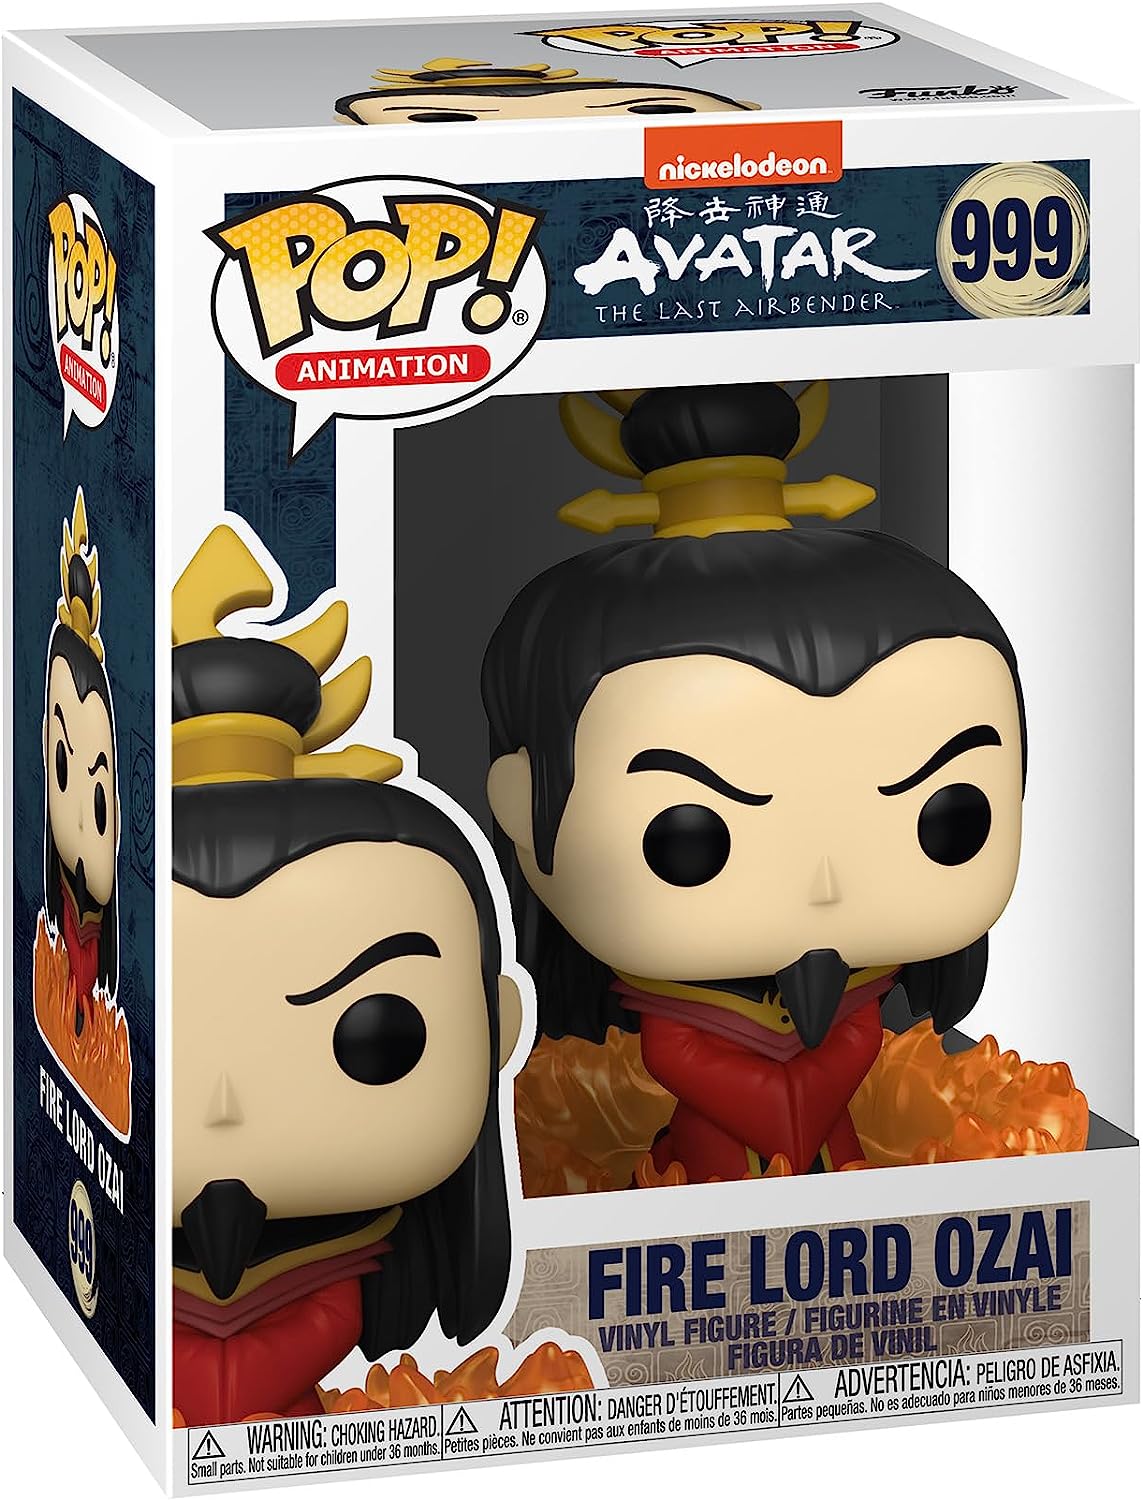 Avatar the Last Airbender: Fire Lord Ozai Pop! Vinyl Figure (999)